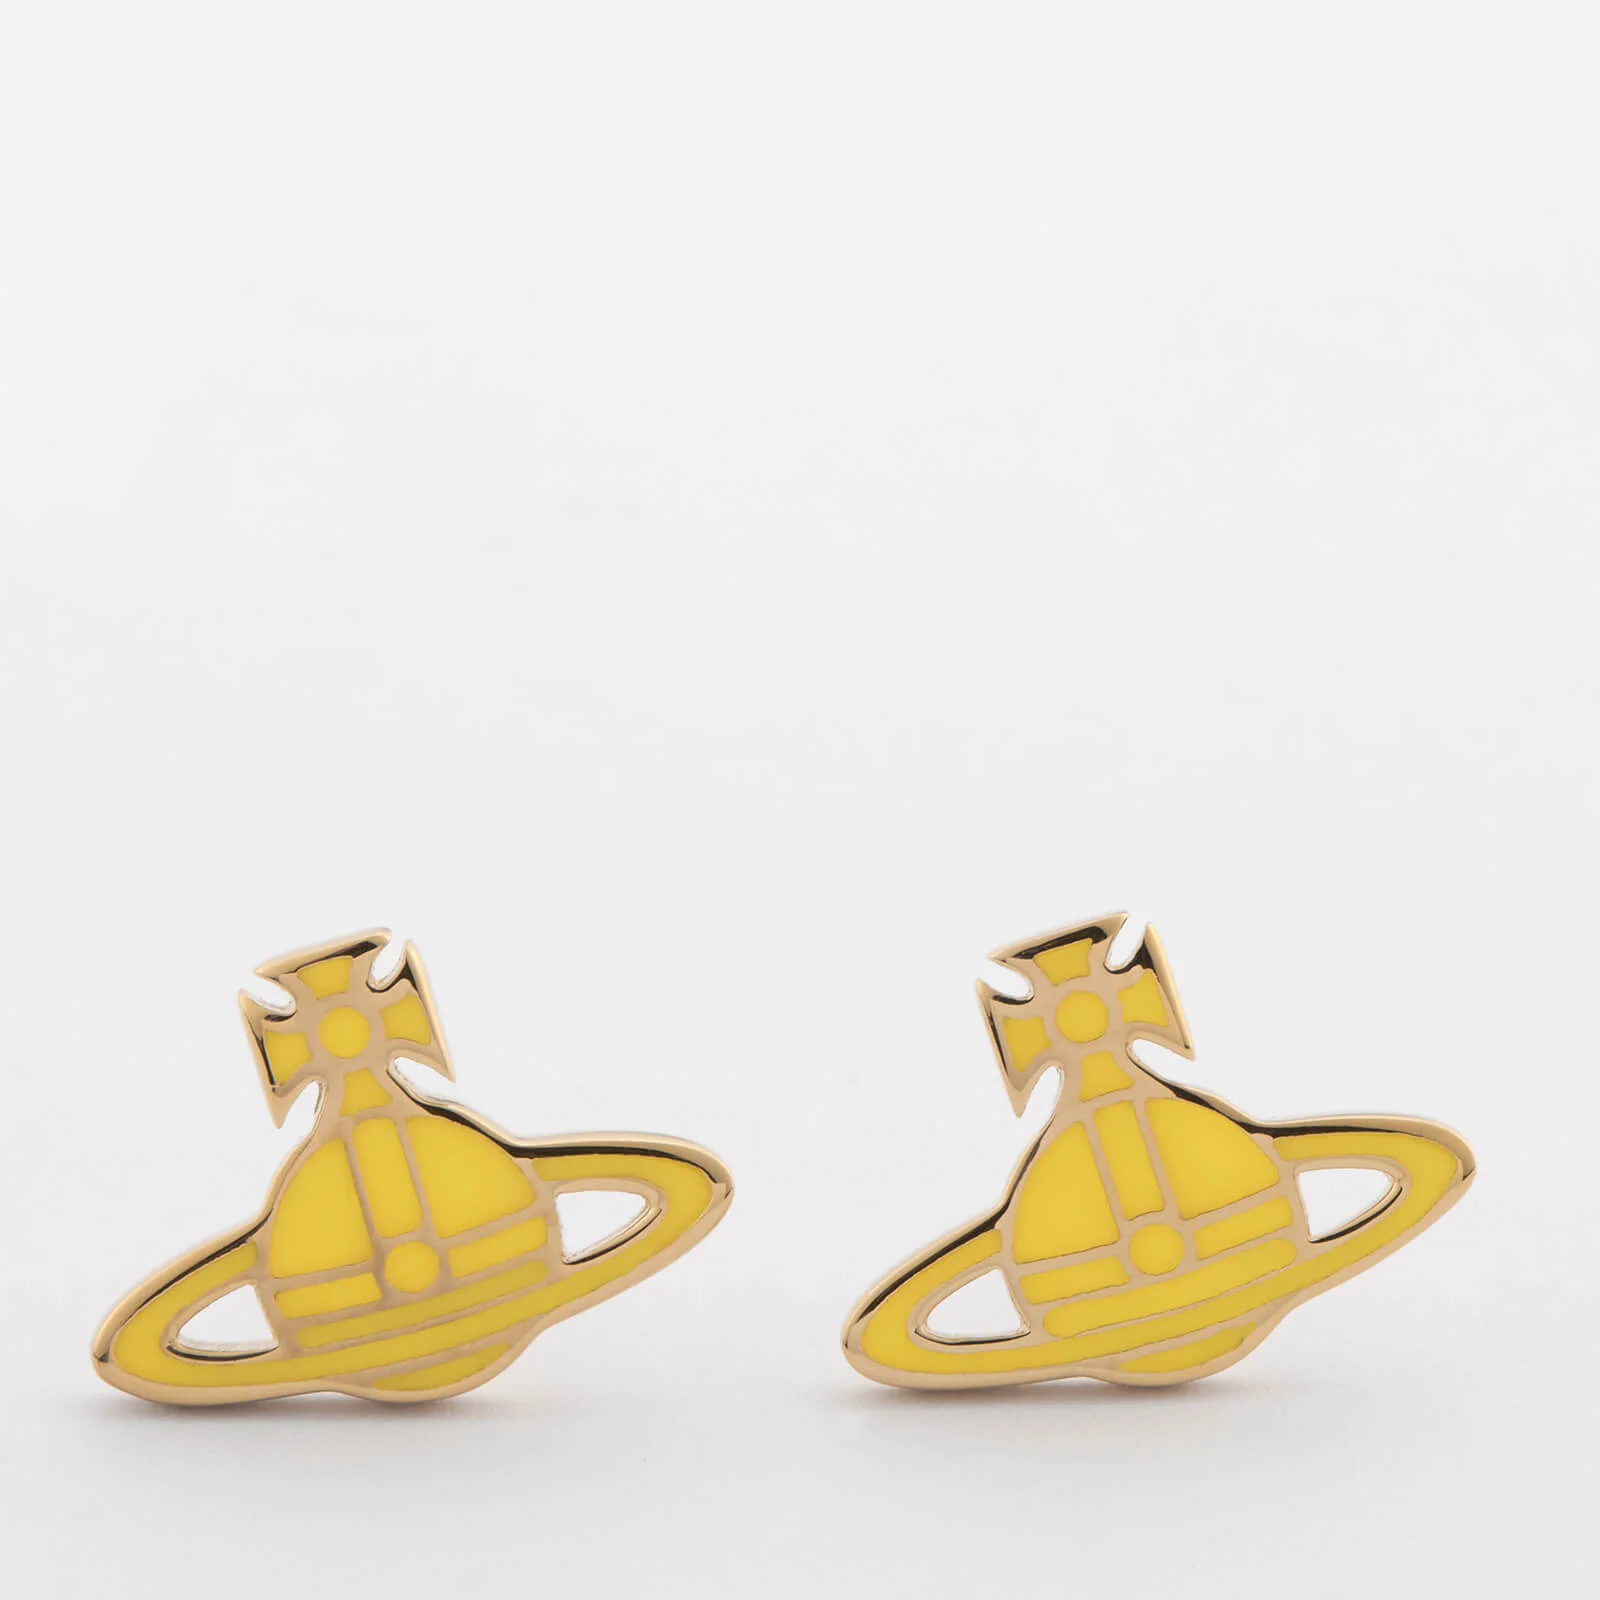 Vivienne Westwood Women's Kate Earrings - Yellow/Gold Image 1